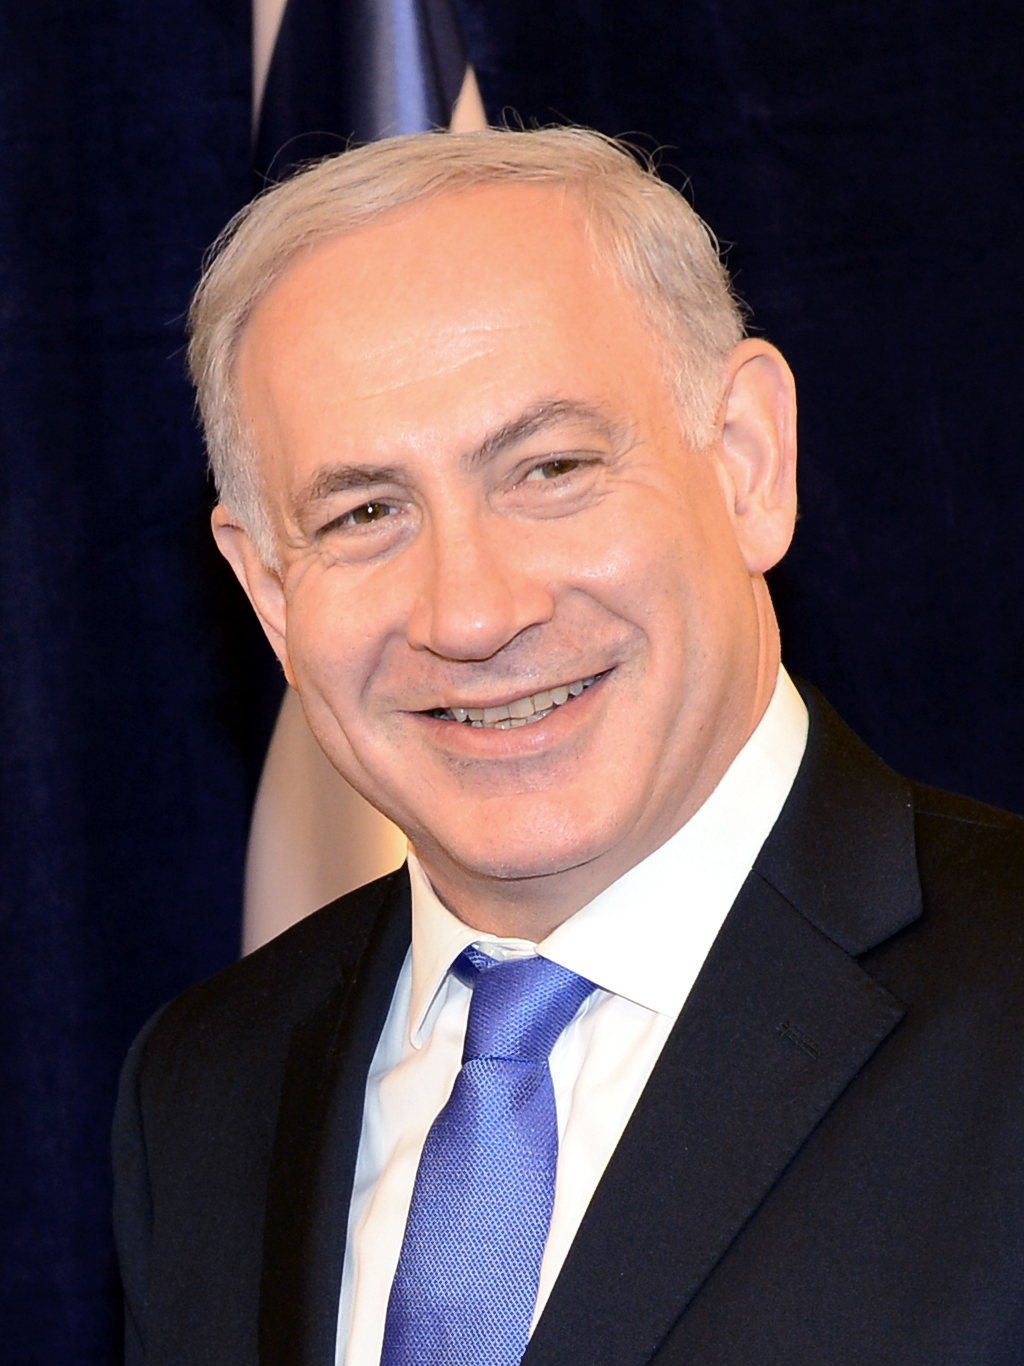 Netanyahu orders Israeli forces to press attacks against militants in Gaza Strip